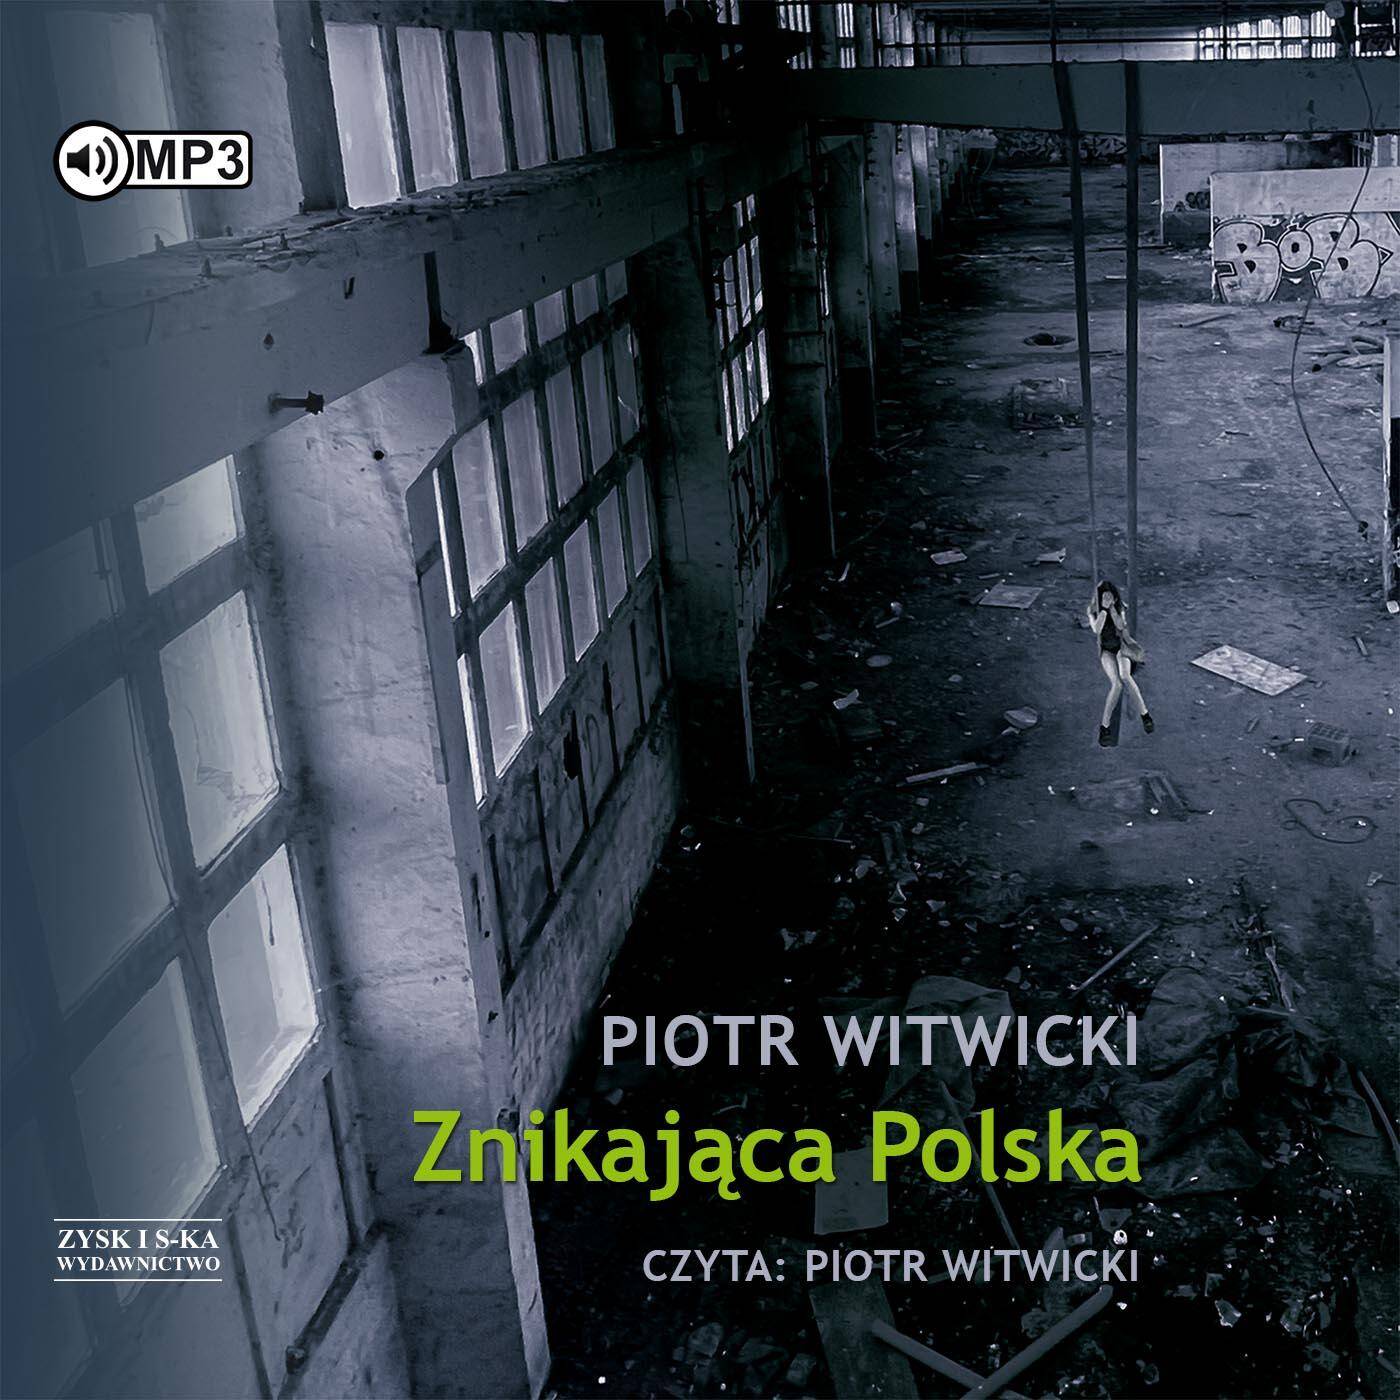 CD MP3 Znikająca Polska